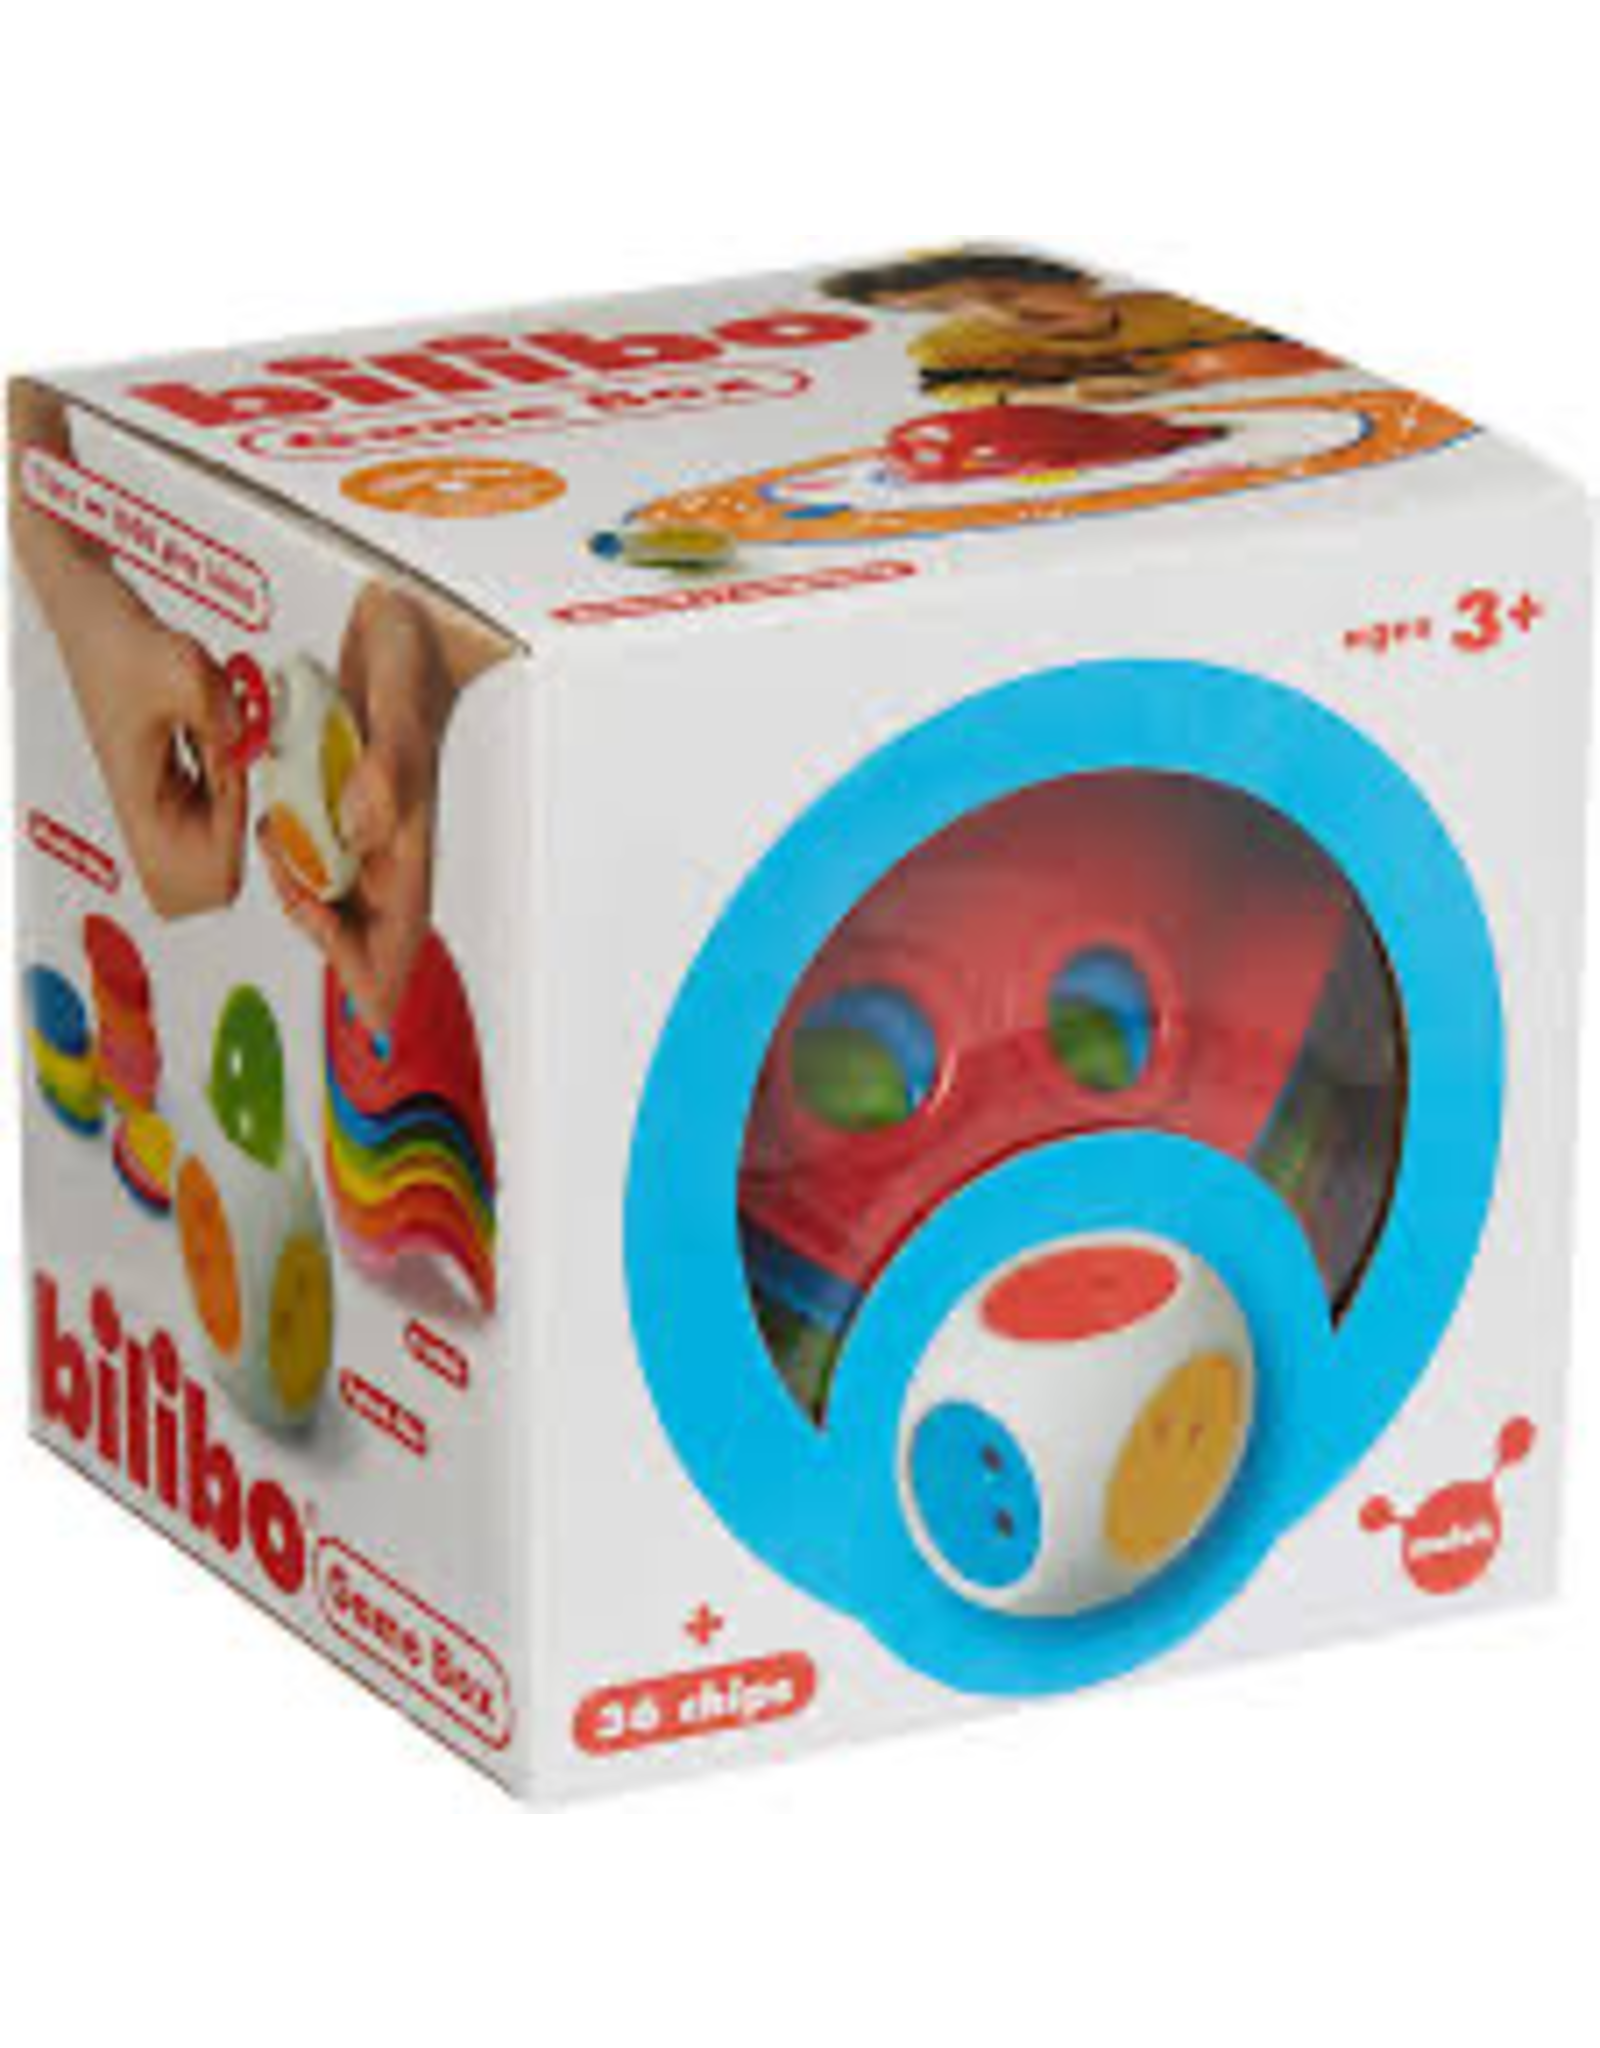 Moluk Bilibo Mini Game Box